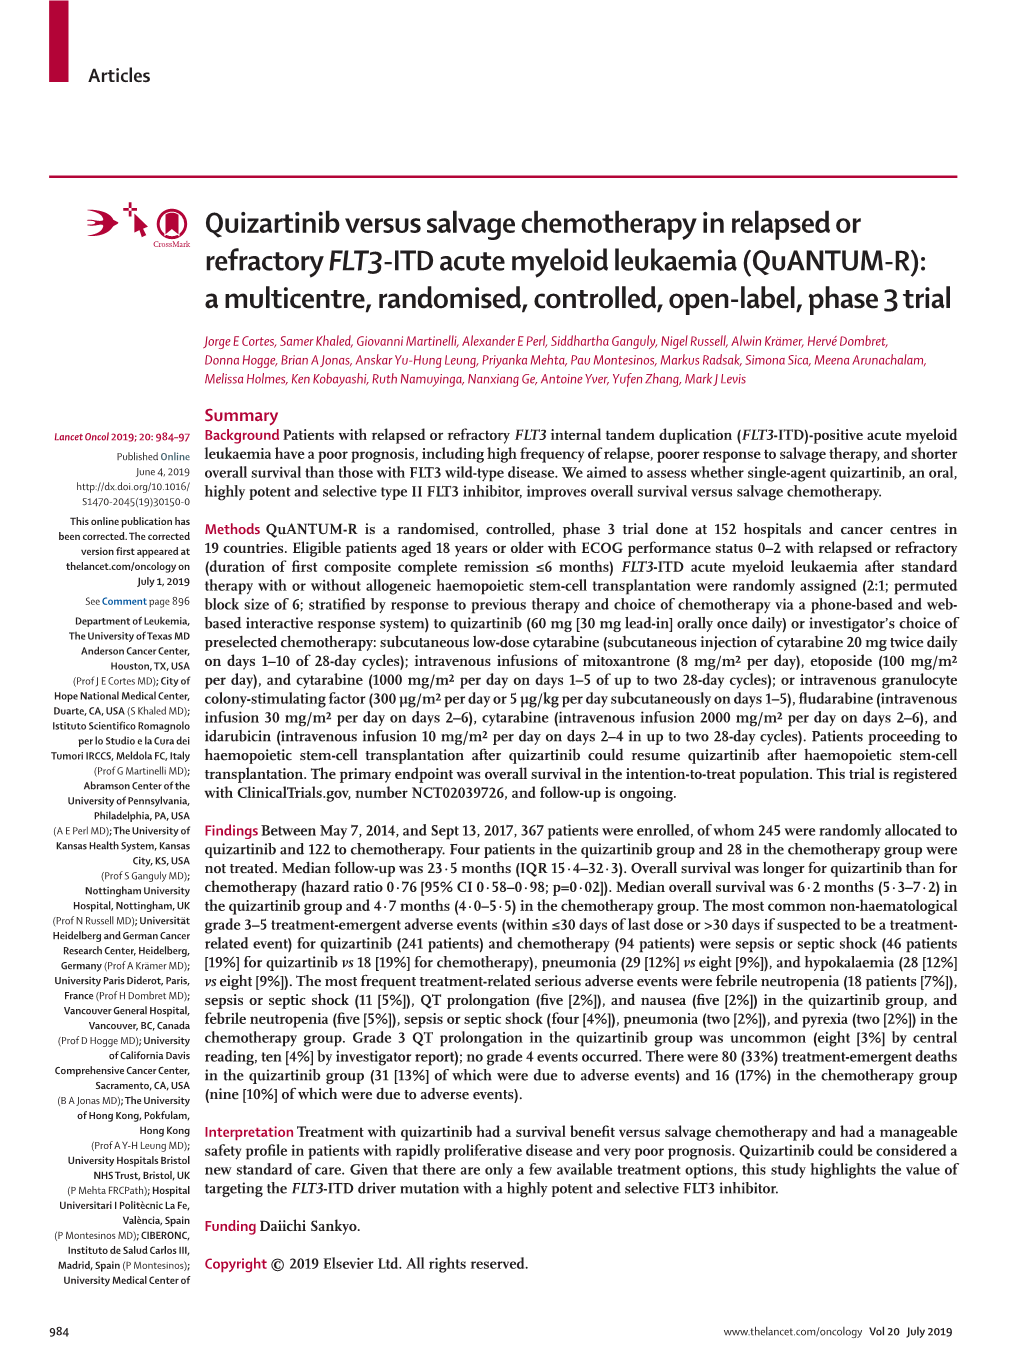 Quizartinib Versus Salvage Chemotherapy in Relapsed Or Refractory FLT3-ITD Acute Myeloid Leukaemia (Quantum-R): a Multicentre, R